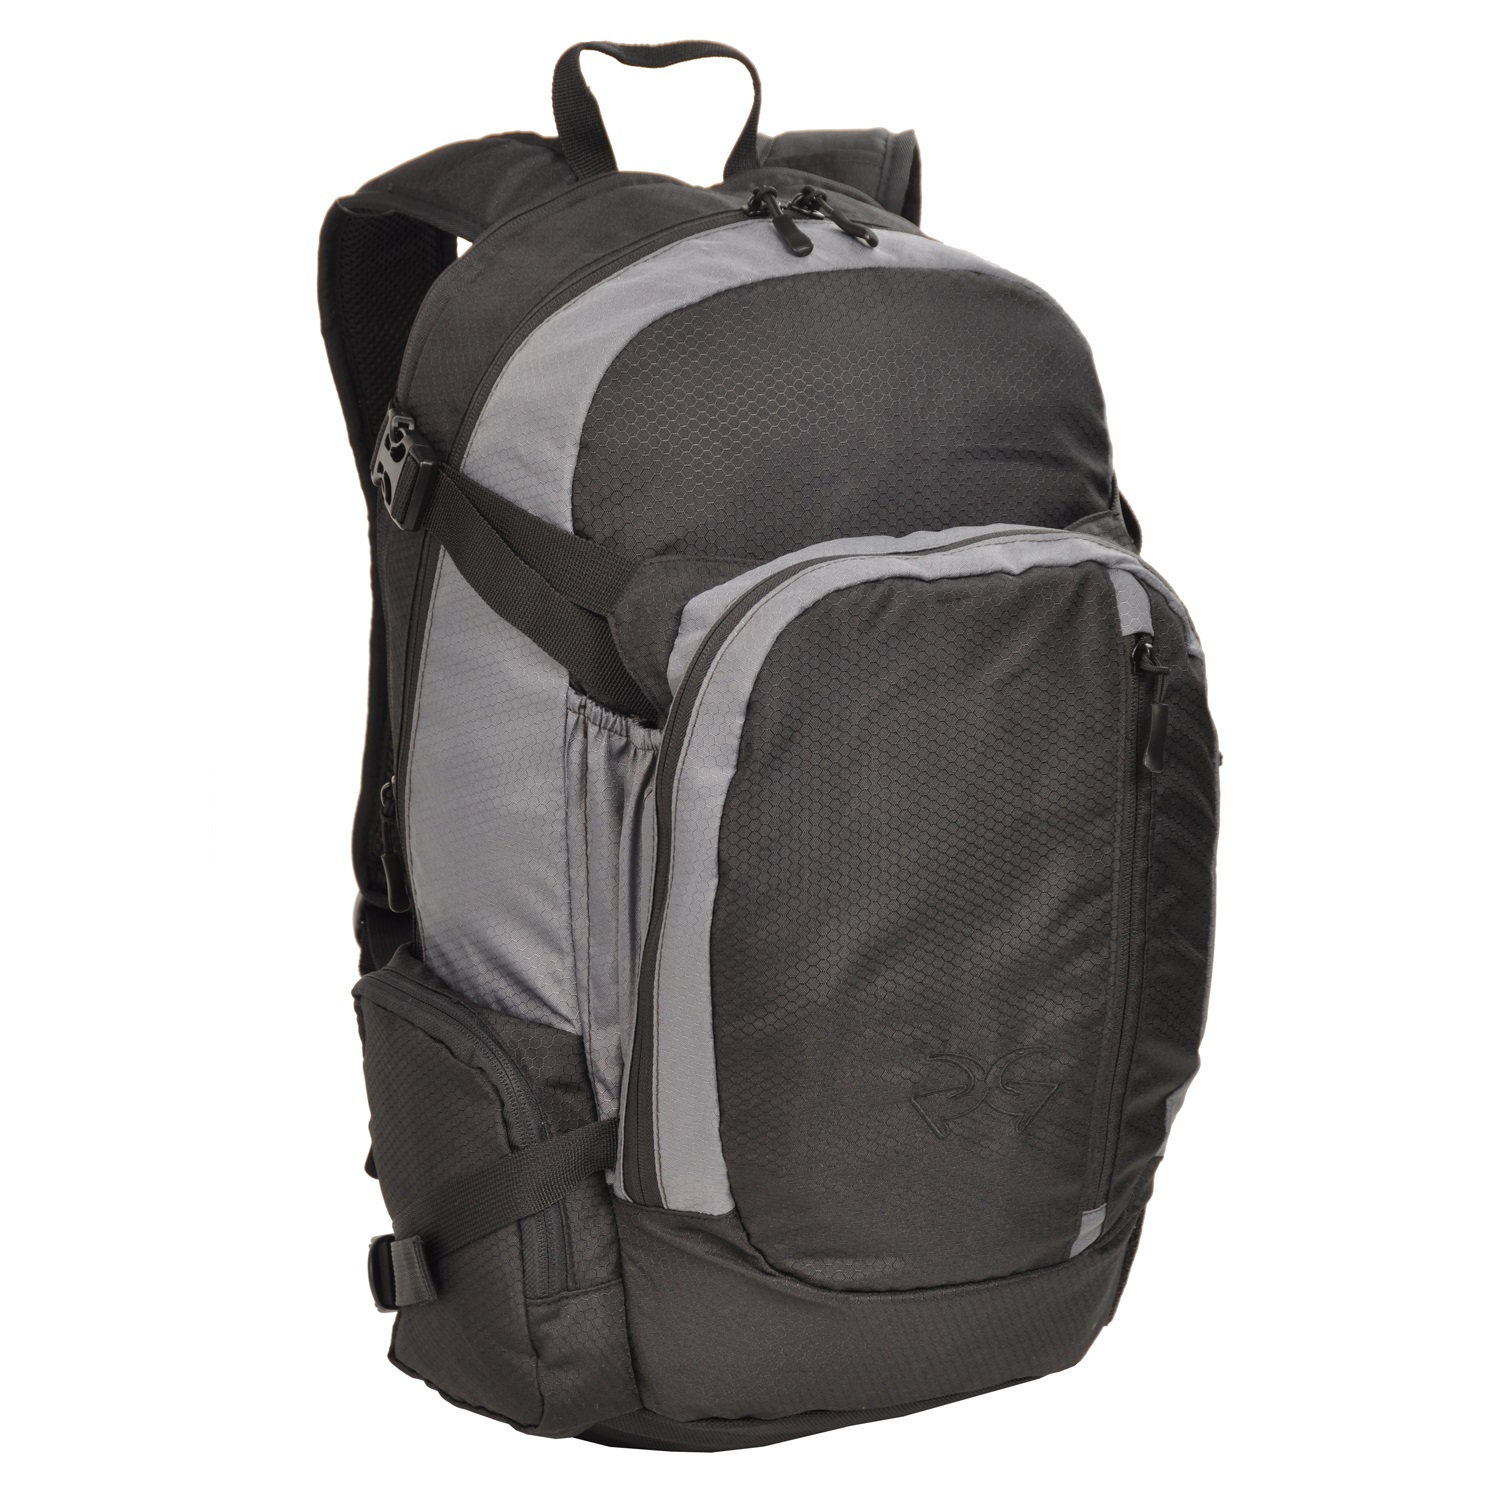 Sandpiper Ridgeline Backpack, Black/Light Grey - image 1 of 2